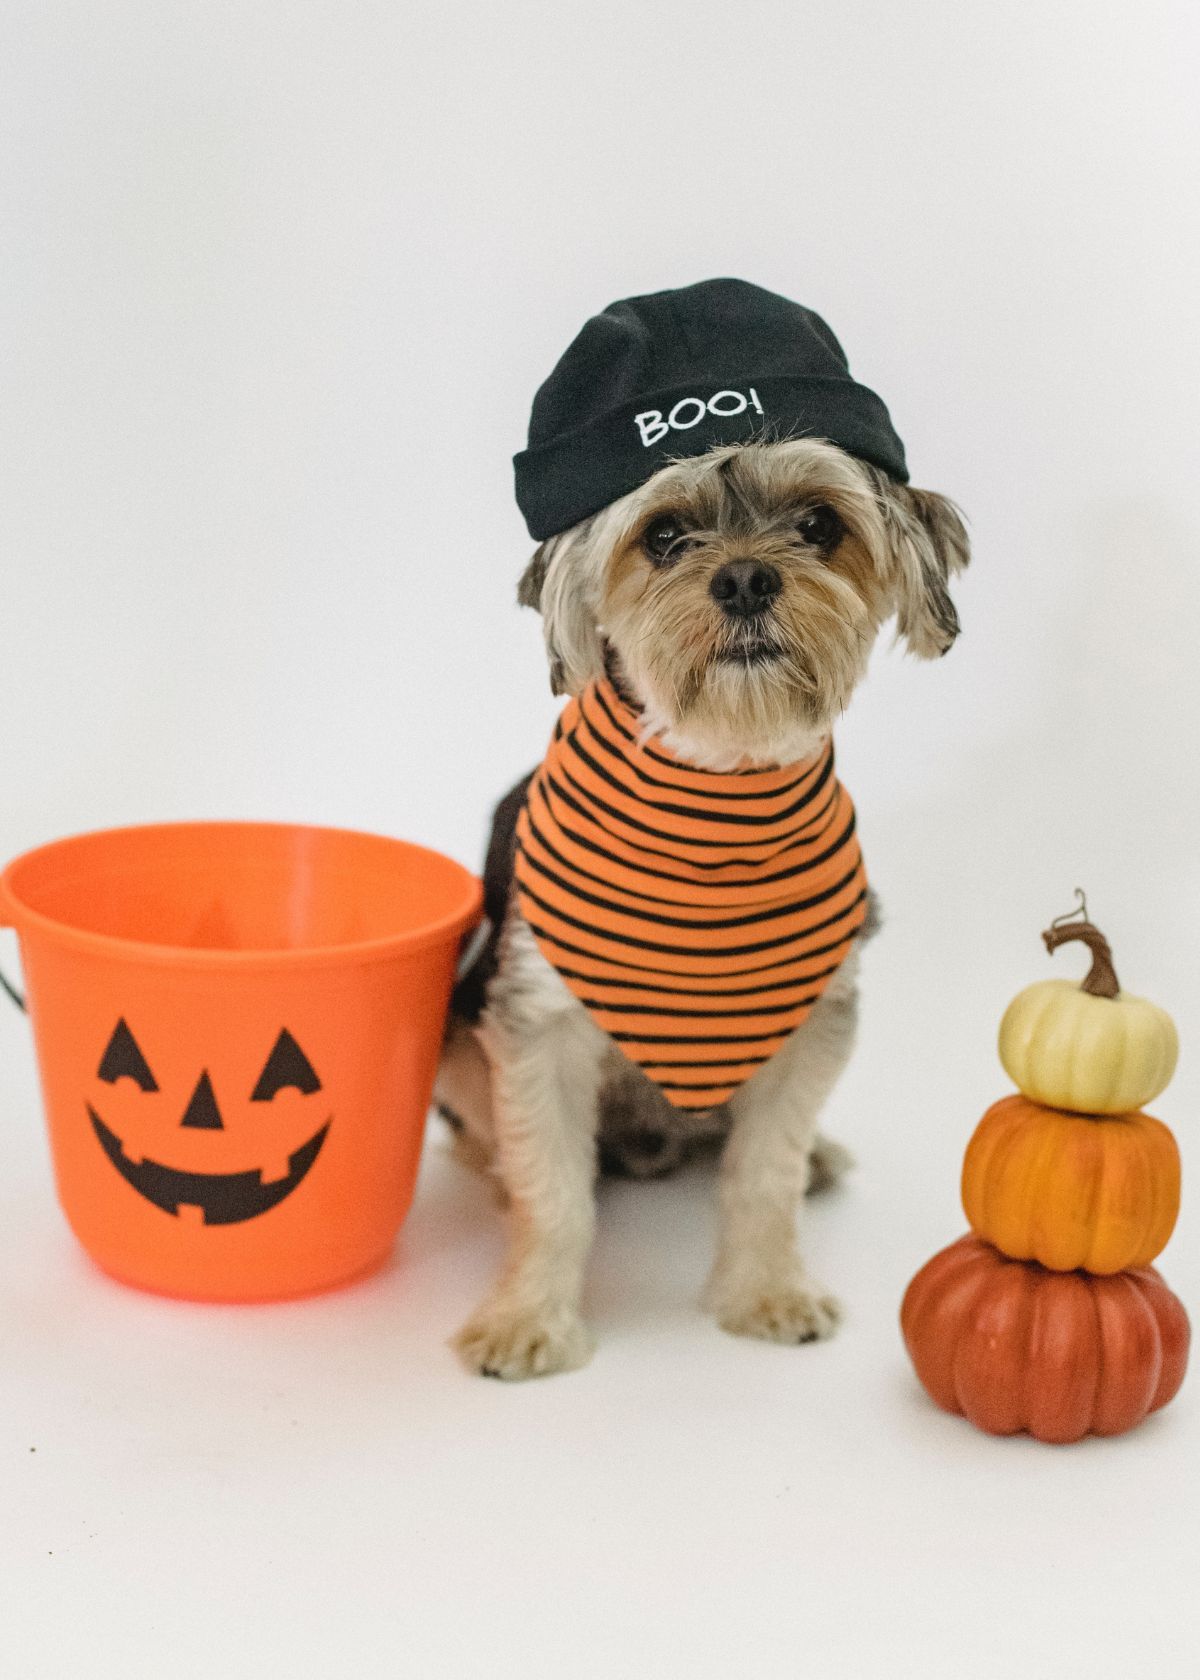 Keep your dog safe on Halloween